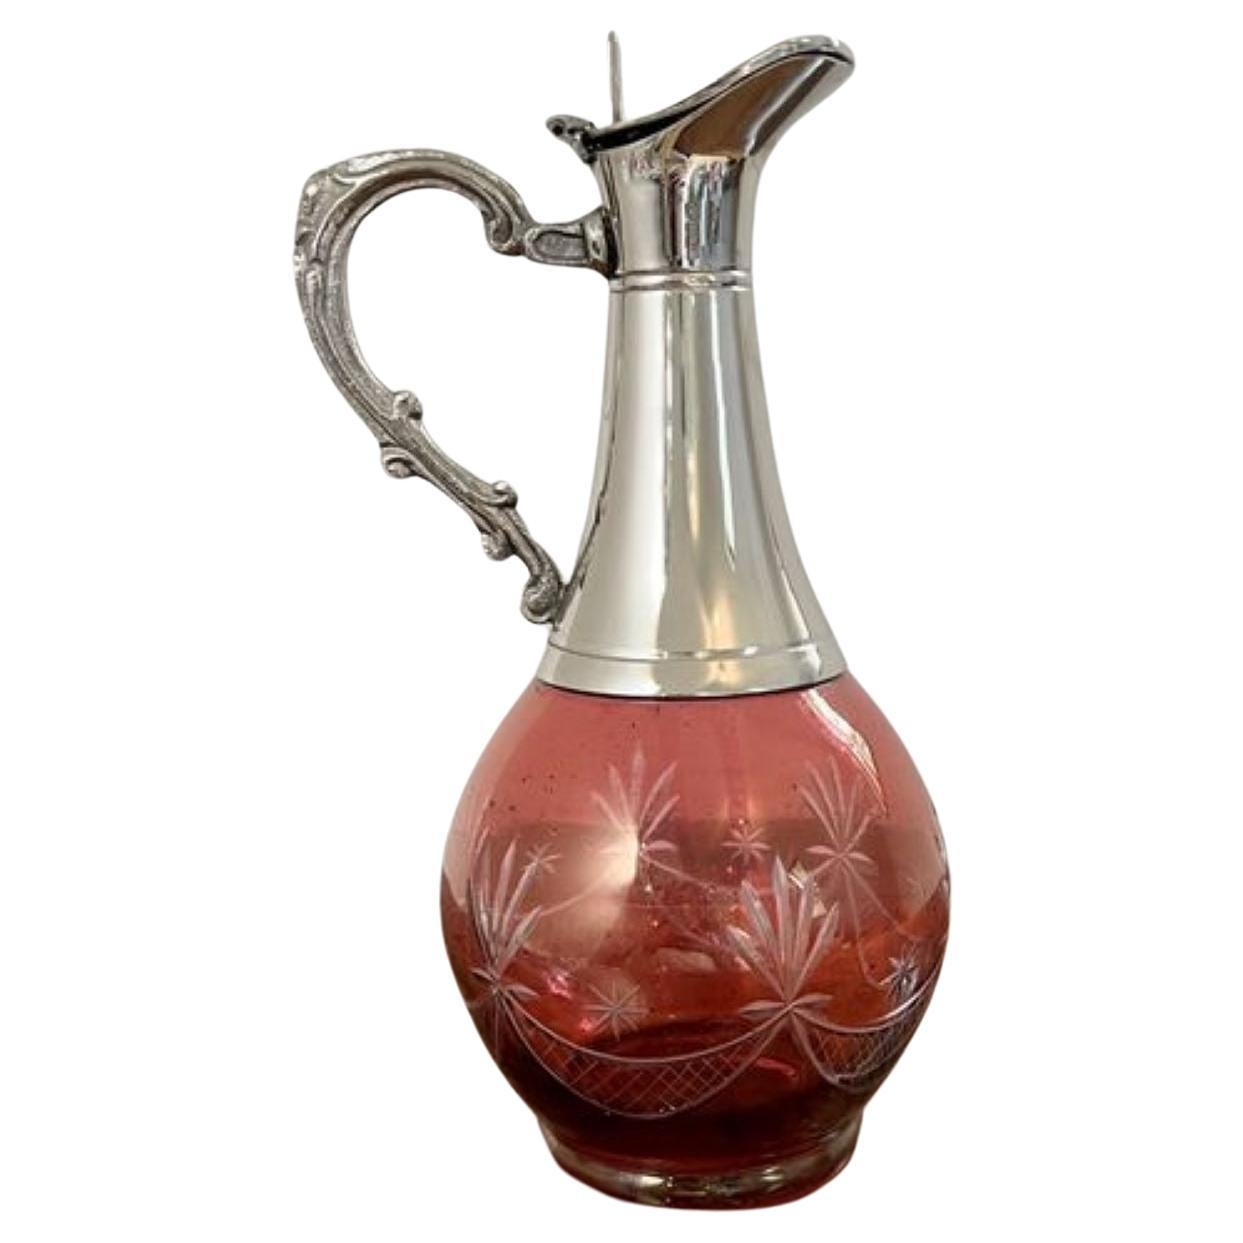 https://a.1stdibscdn.com/quality-antique-edwardian-cranberry-glass-wine-decanter-for-sale/f_92142/f_363680021695917373500/f_36368002_1695917373878_bg_processed.jpg